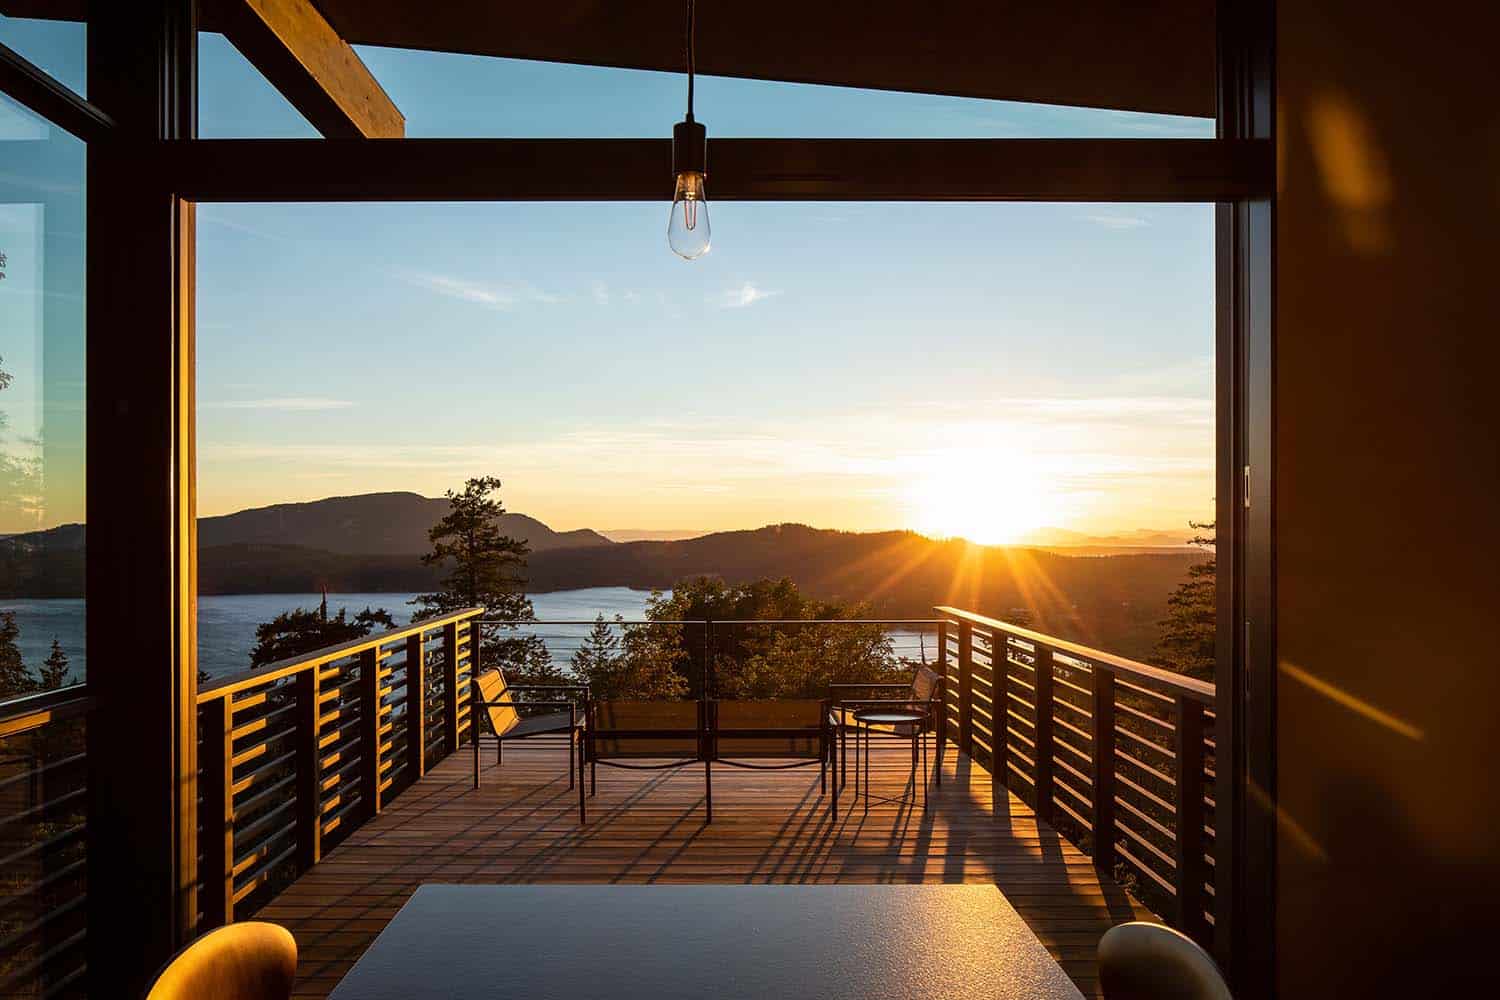 contemporary mountain cabin outdoor patio with a view